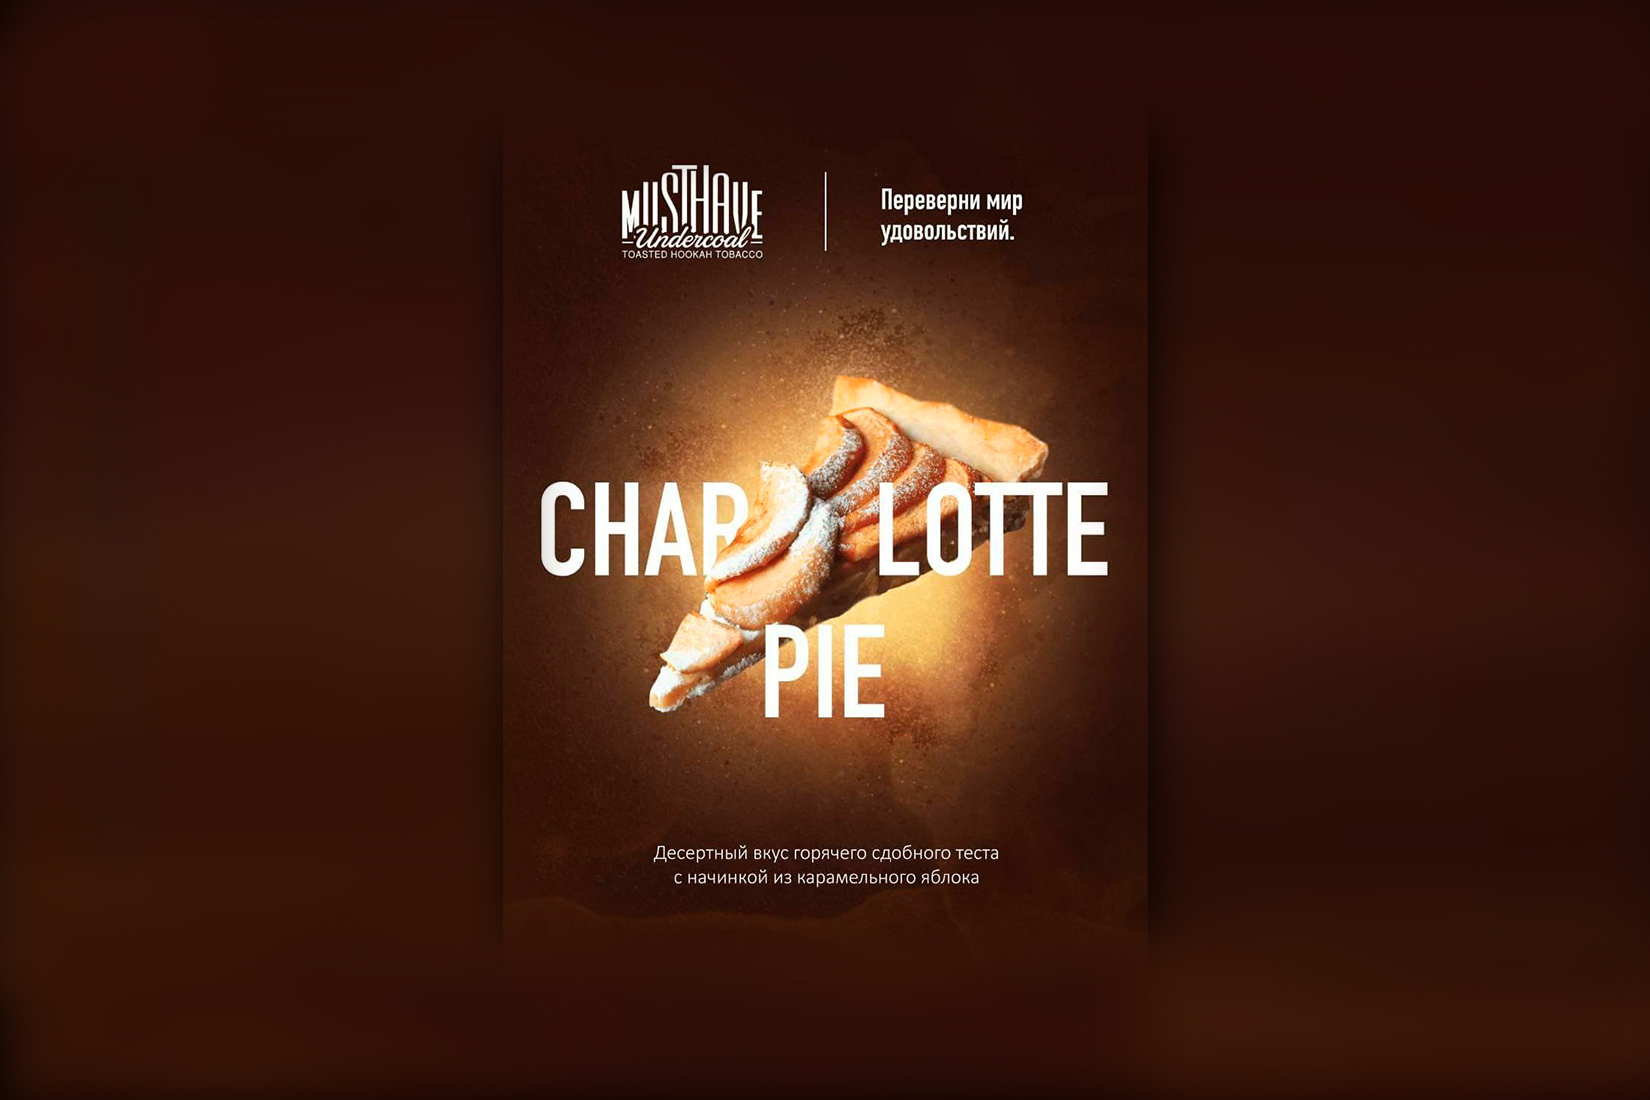 Табак для кальяна MustHave Charlotte pie – описание, миксы, отзывы